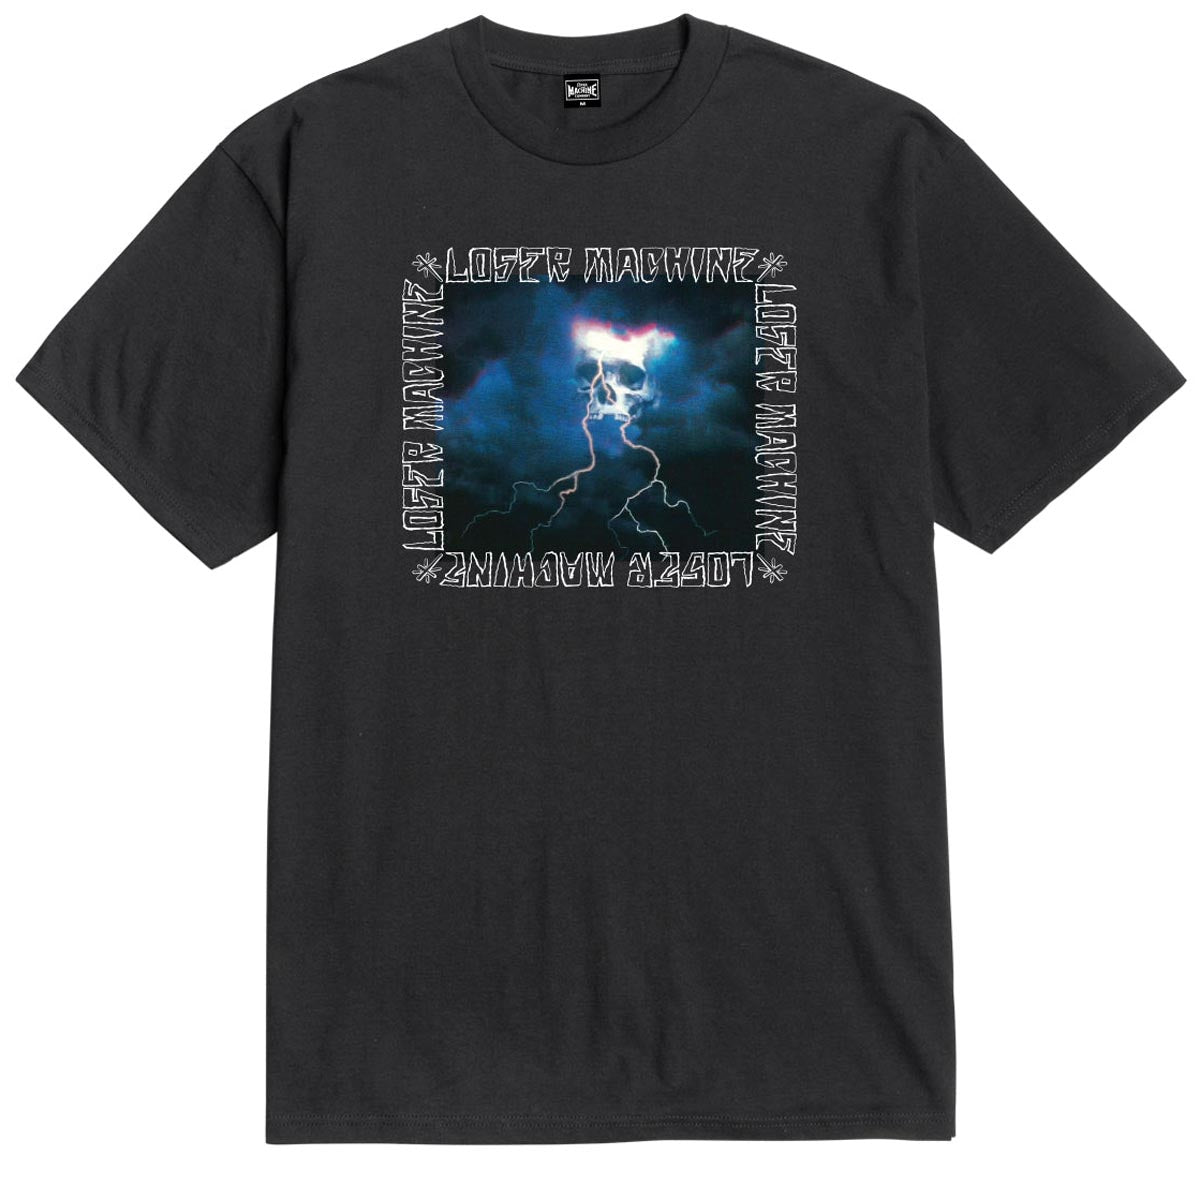 Loser Machine Lightning Strike T-Shirt - Black image 1